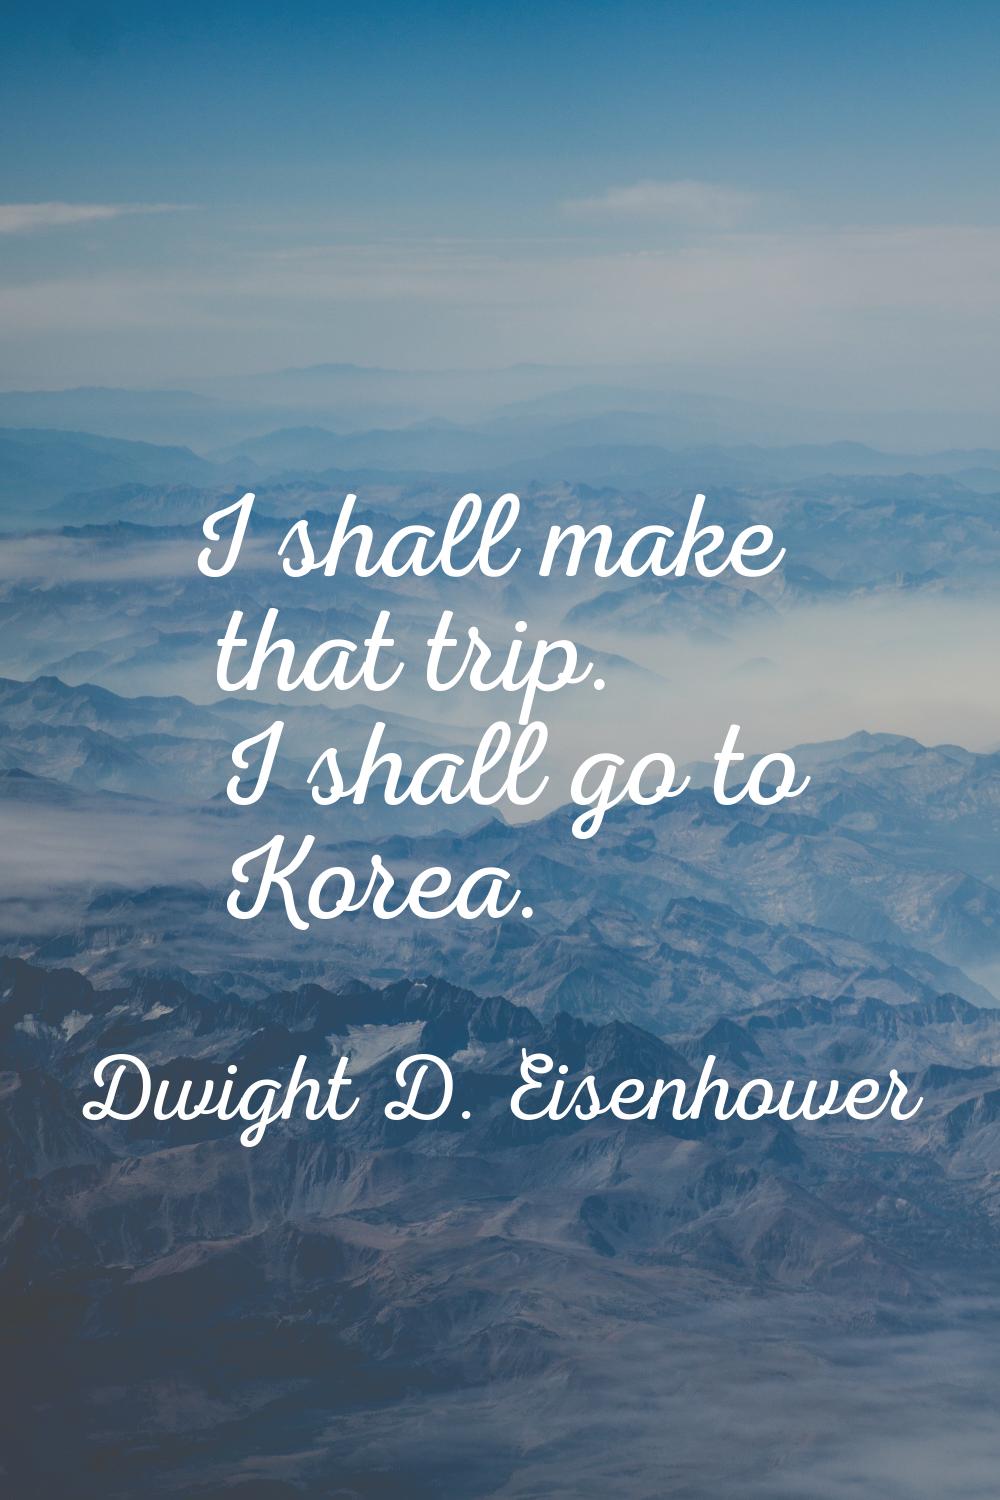 I shall make that trip. I shall go to Korea.